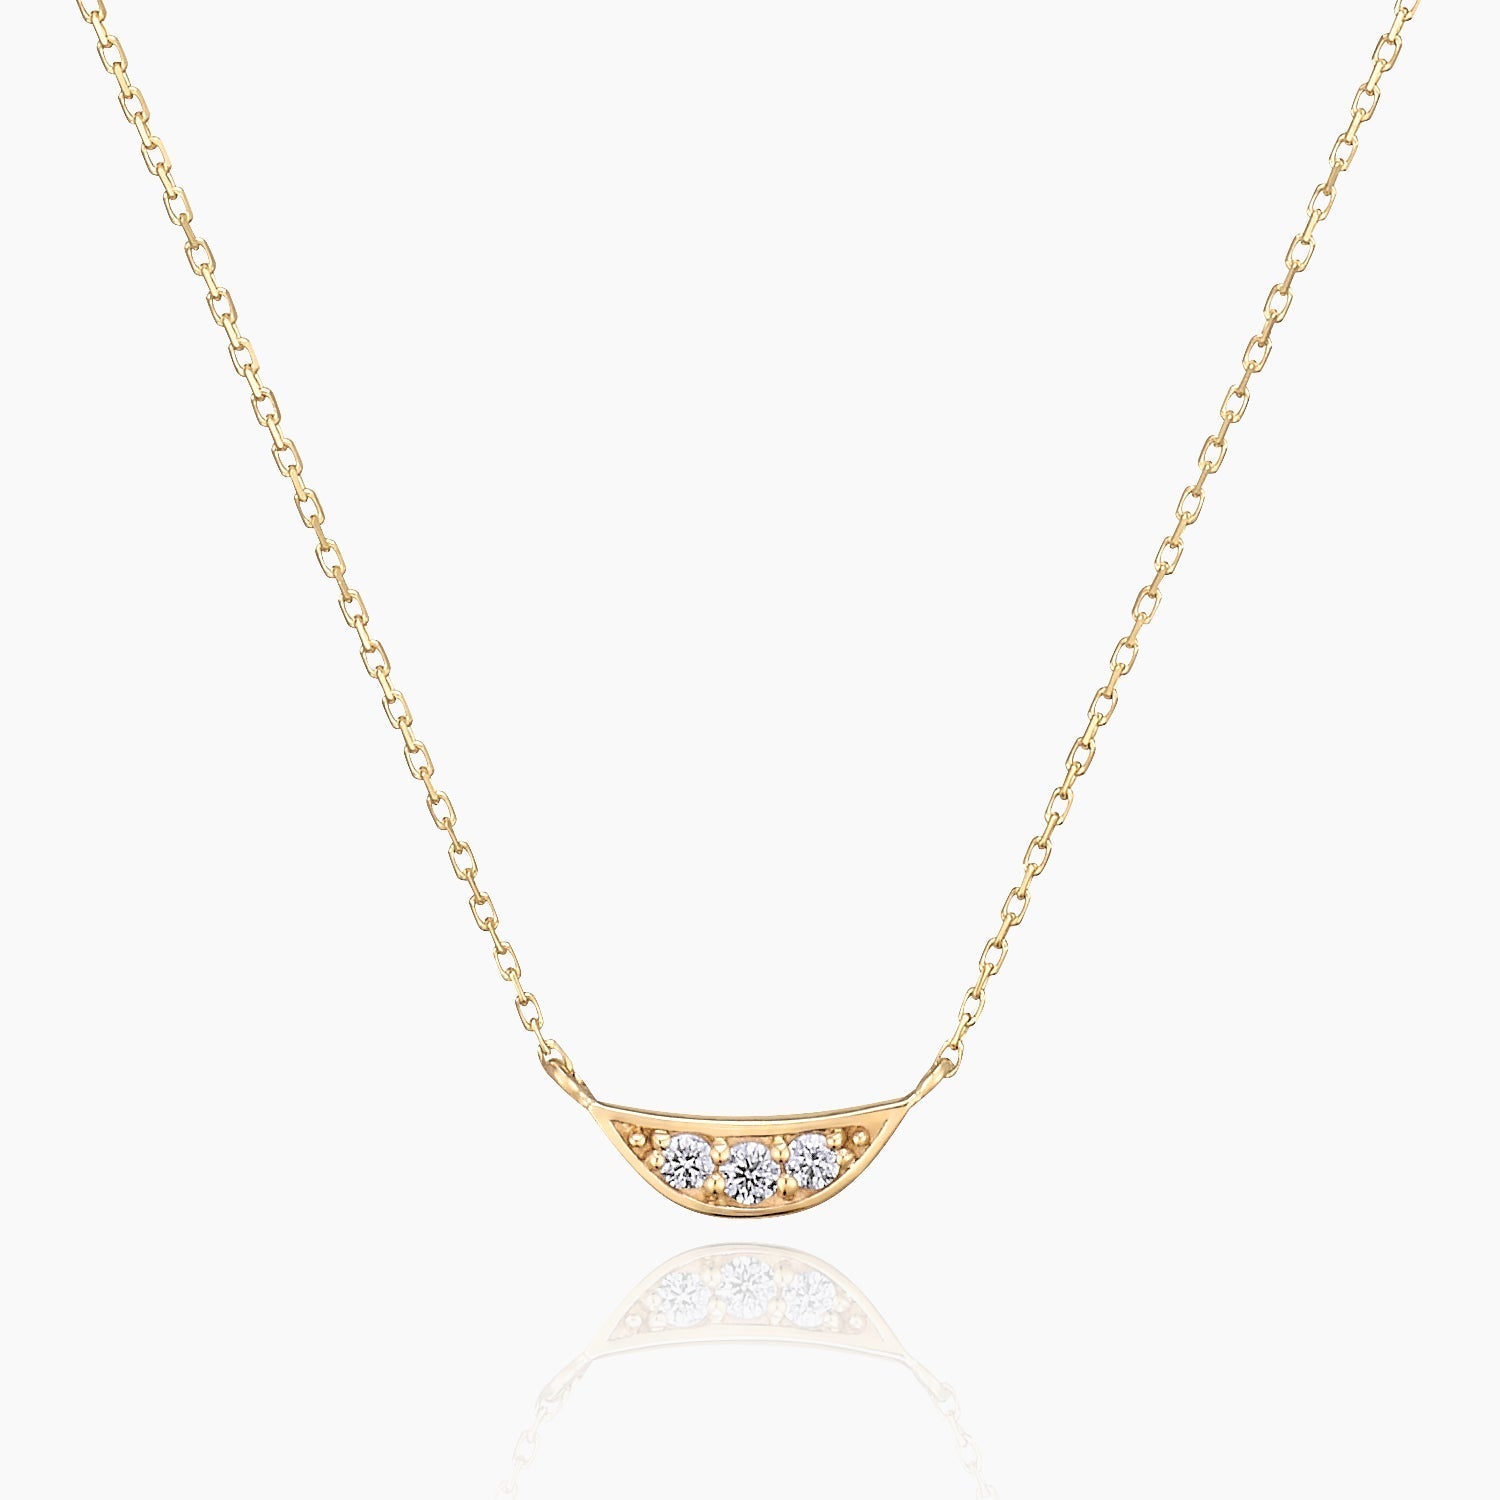 Finn フィン ネックレス 宝石は天然ダイヤモンド 計0.02ct 素材はK10のピンクゴールド 商品番号MA29 正面